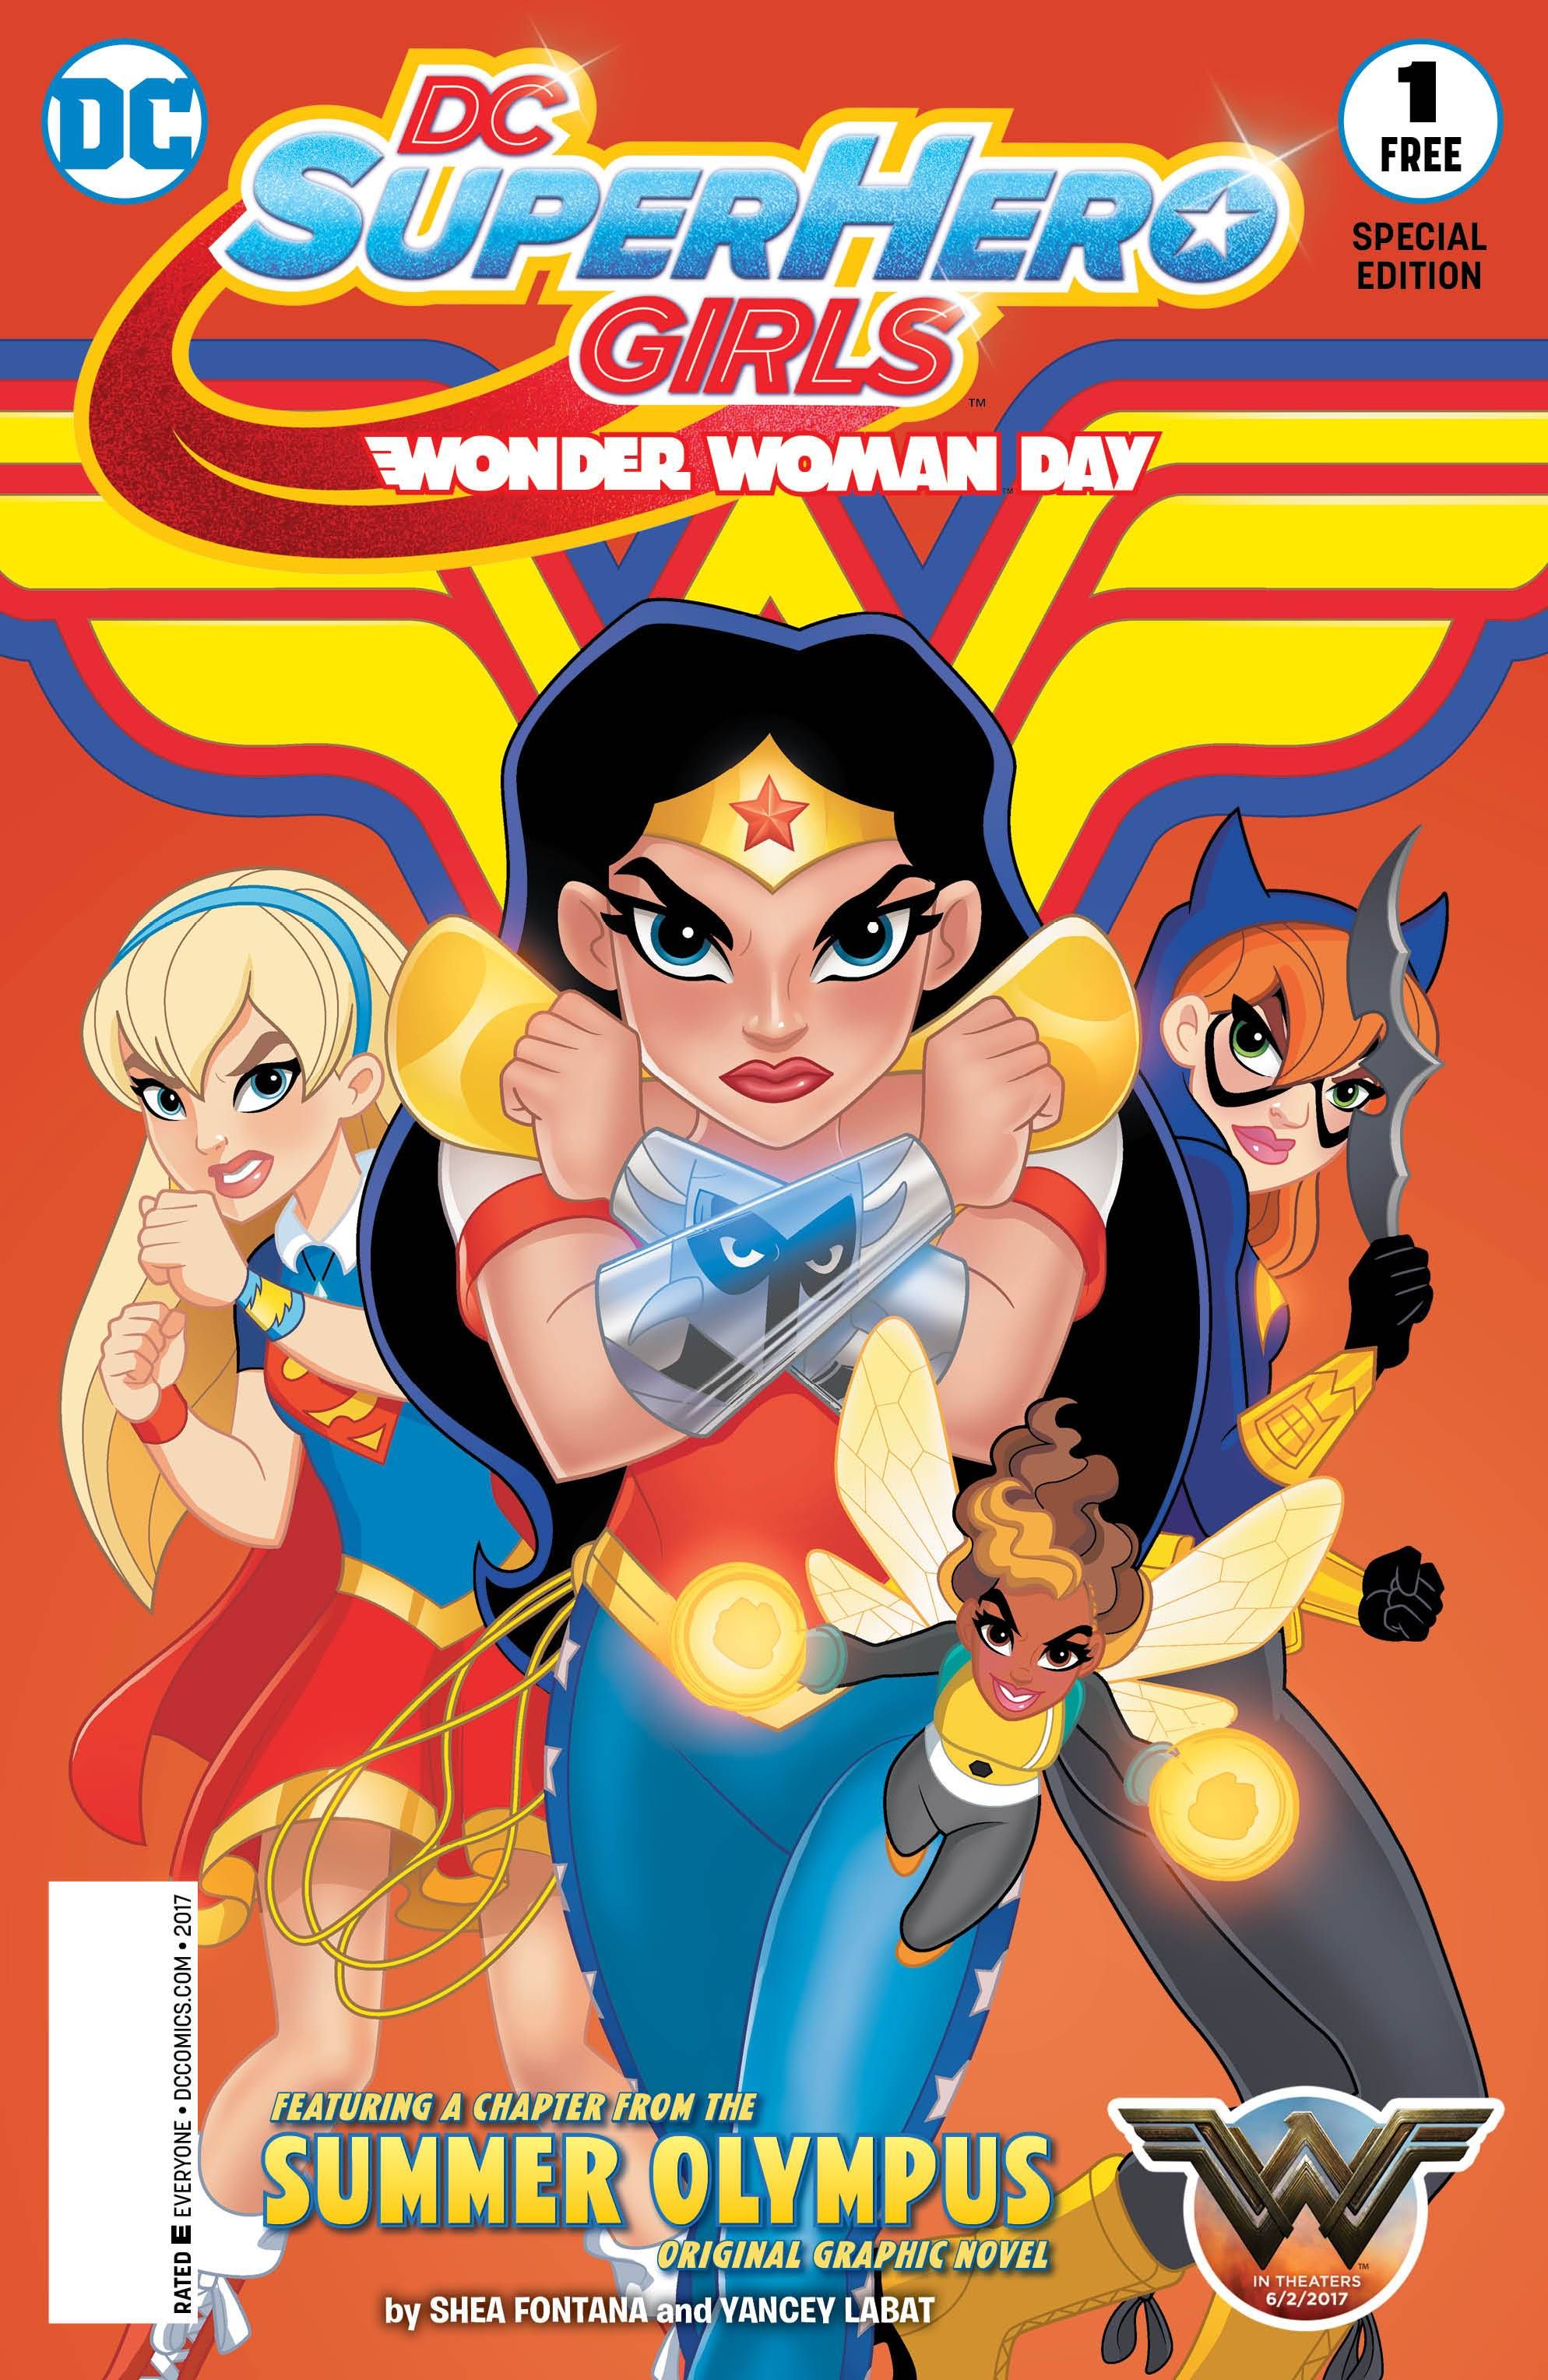 DC Super Hero Girls Wonder Woman Day Special Comic